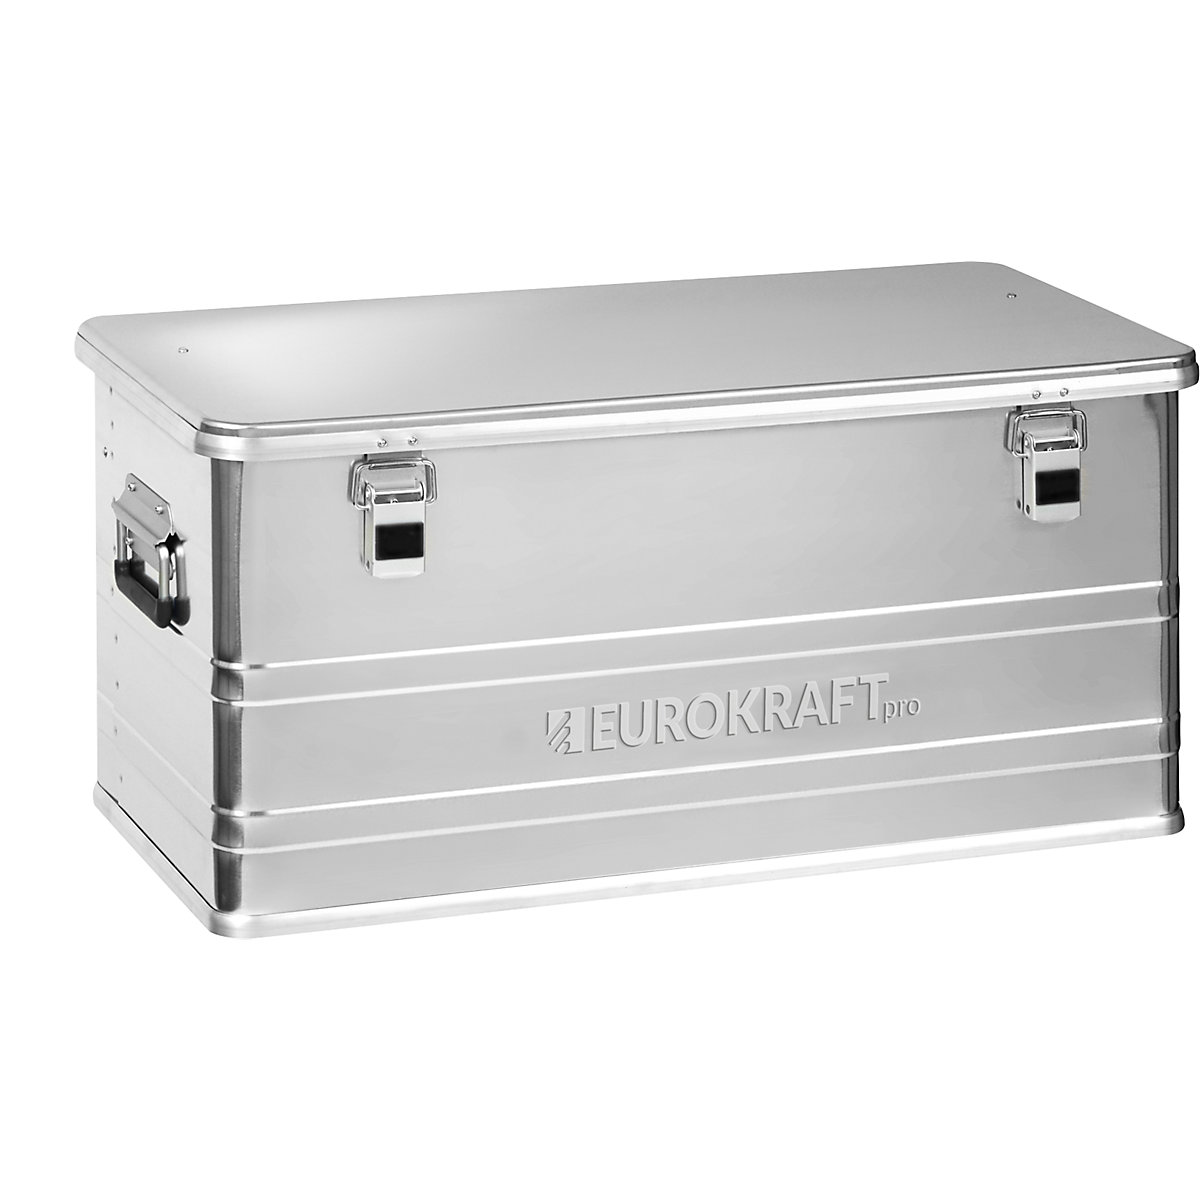 EUROKRAFTpro Aluminiumbehälter INDUSTRY, Inhalt 92 l, Außen-LxBxH 780 x 385 x 367 mm